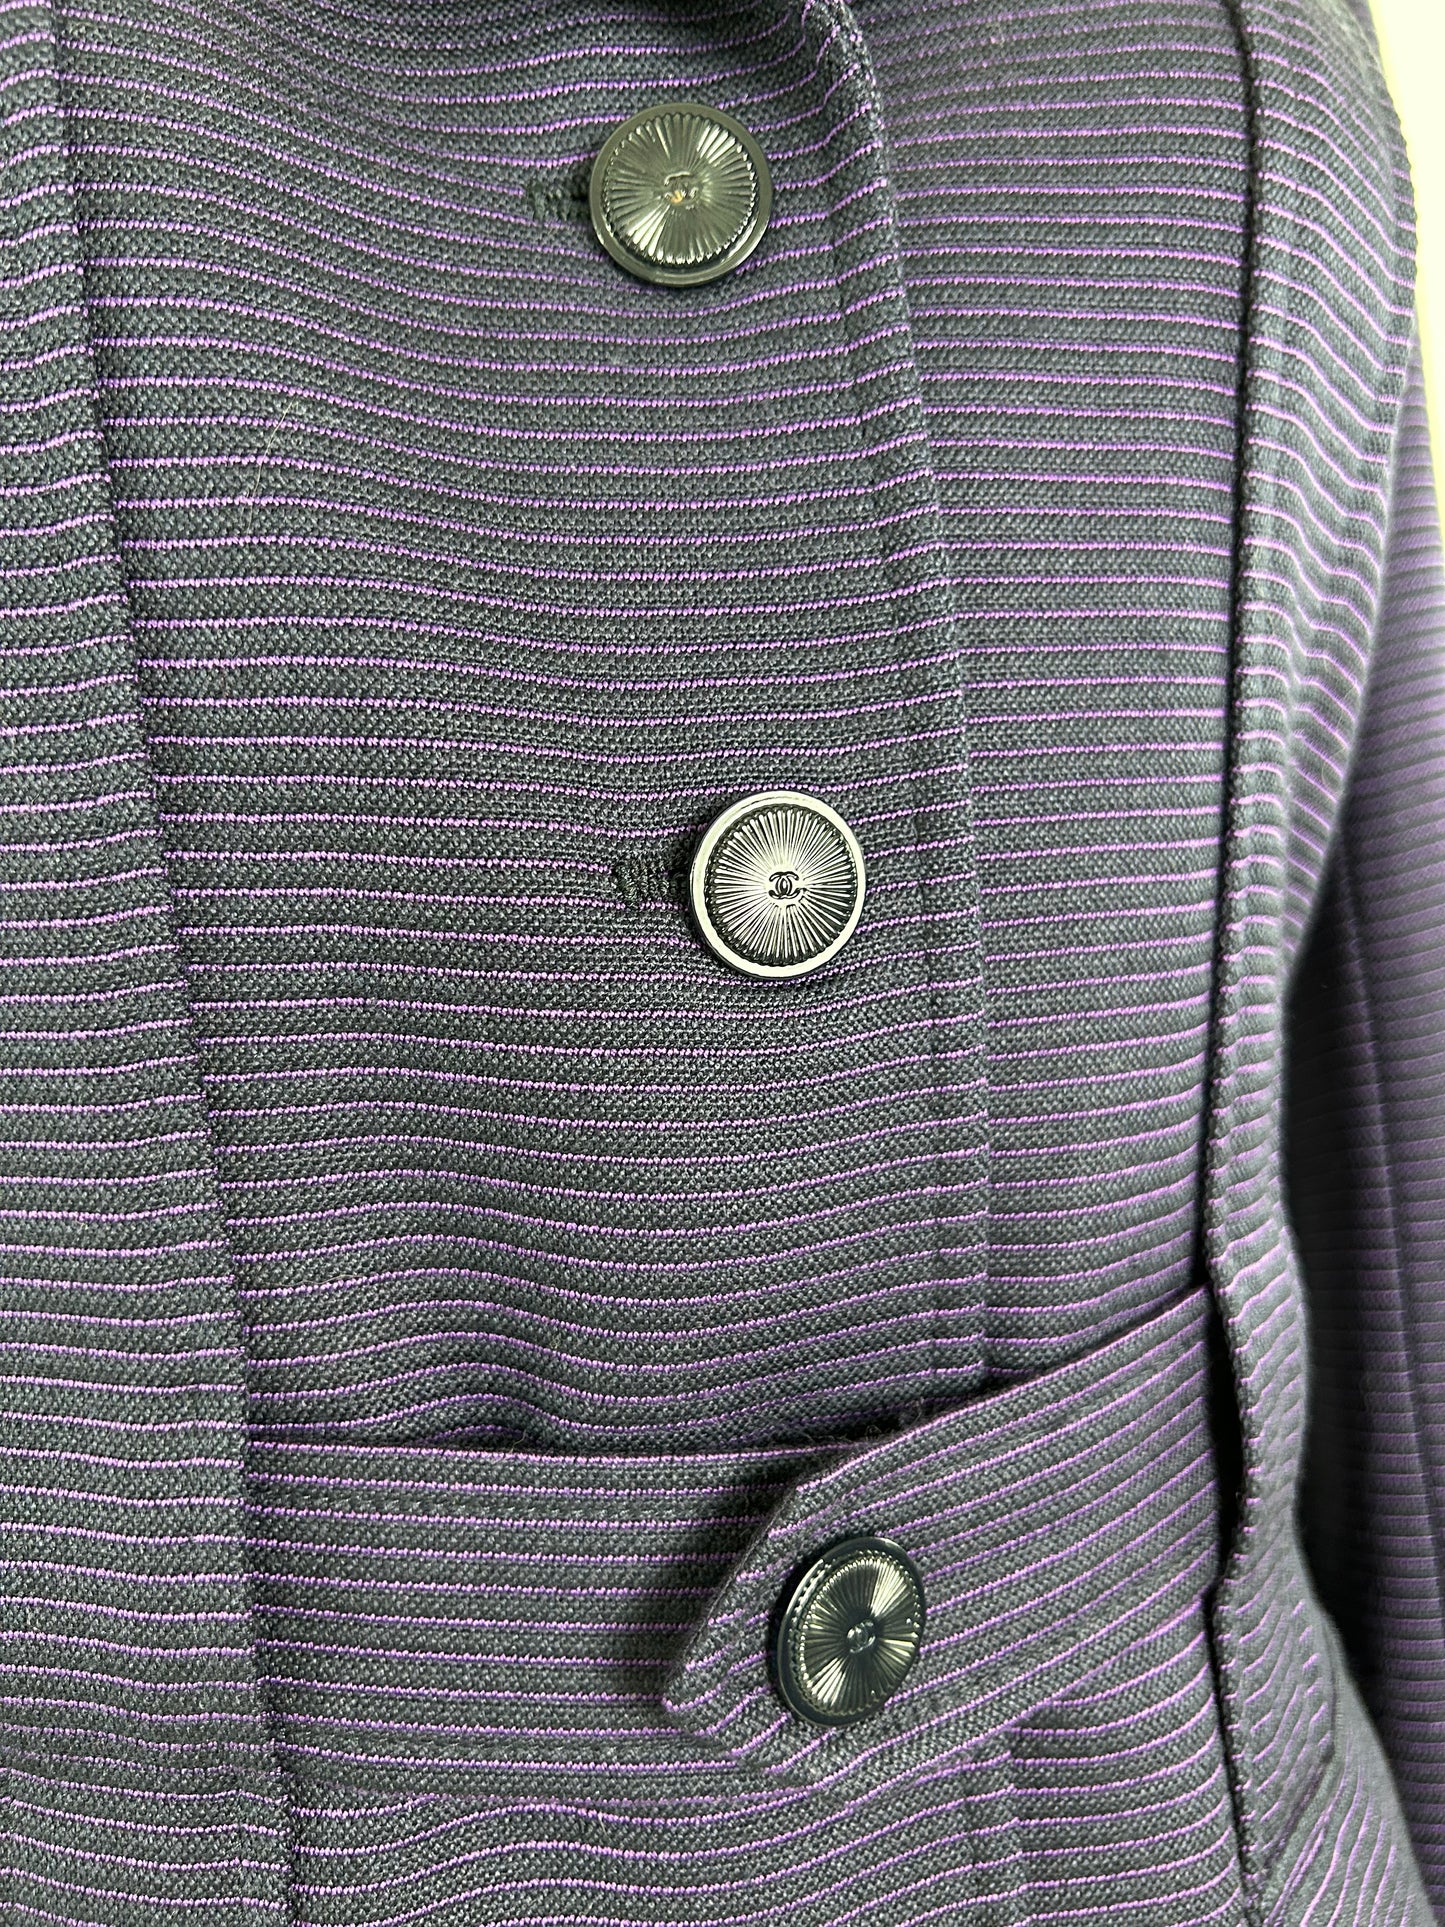 Chanel Black and Purple Pin Stripe Blazer